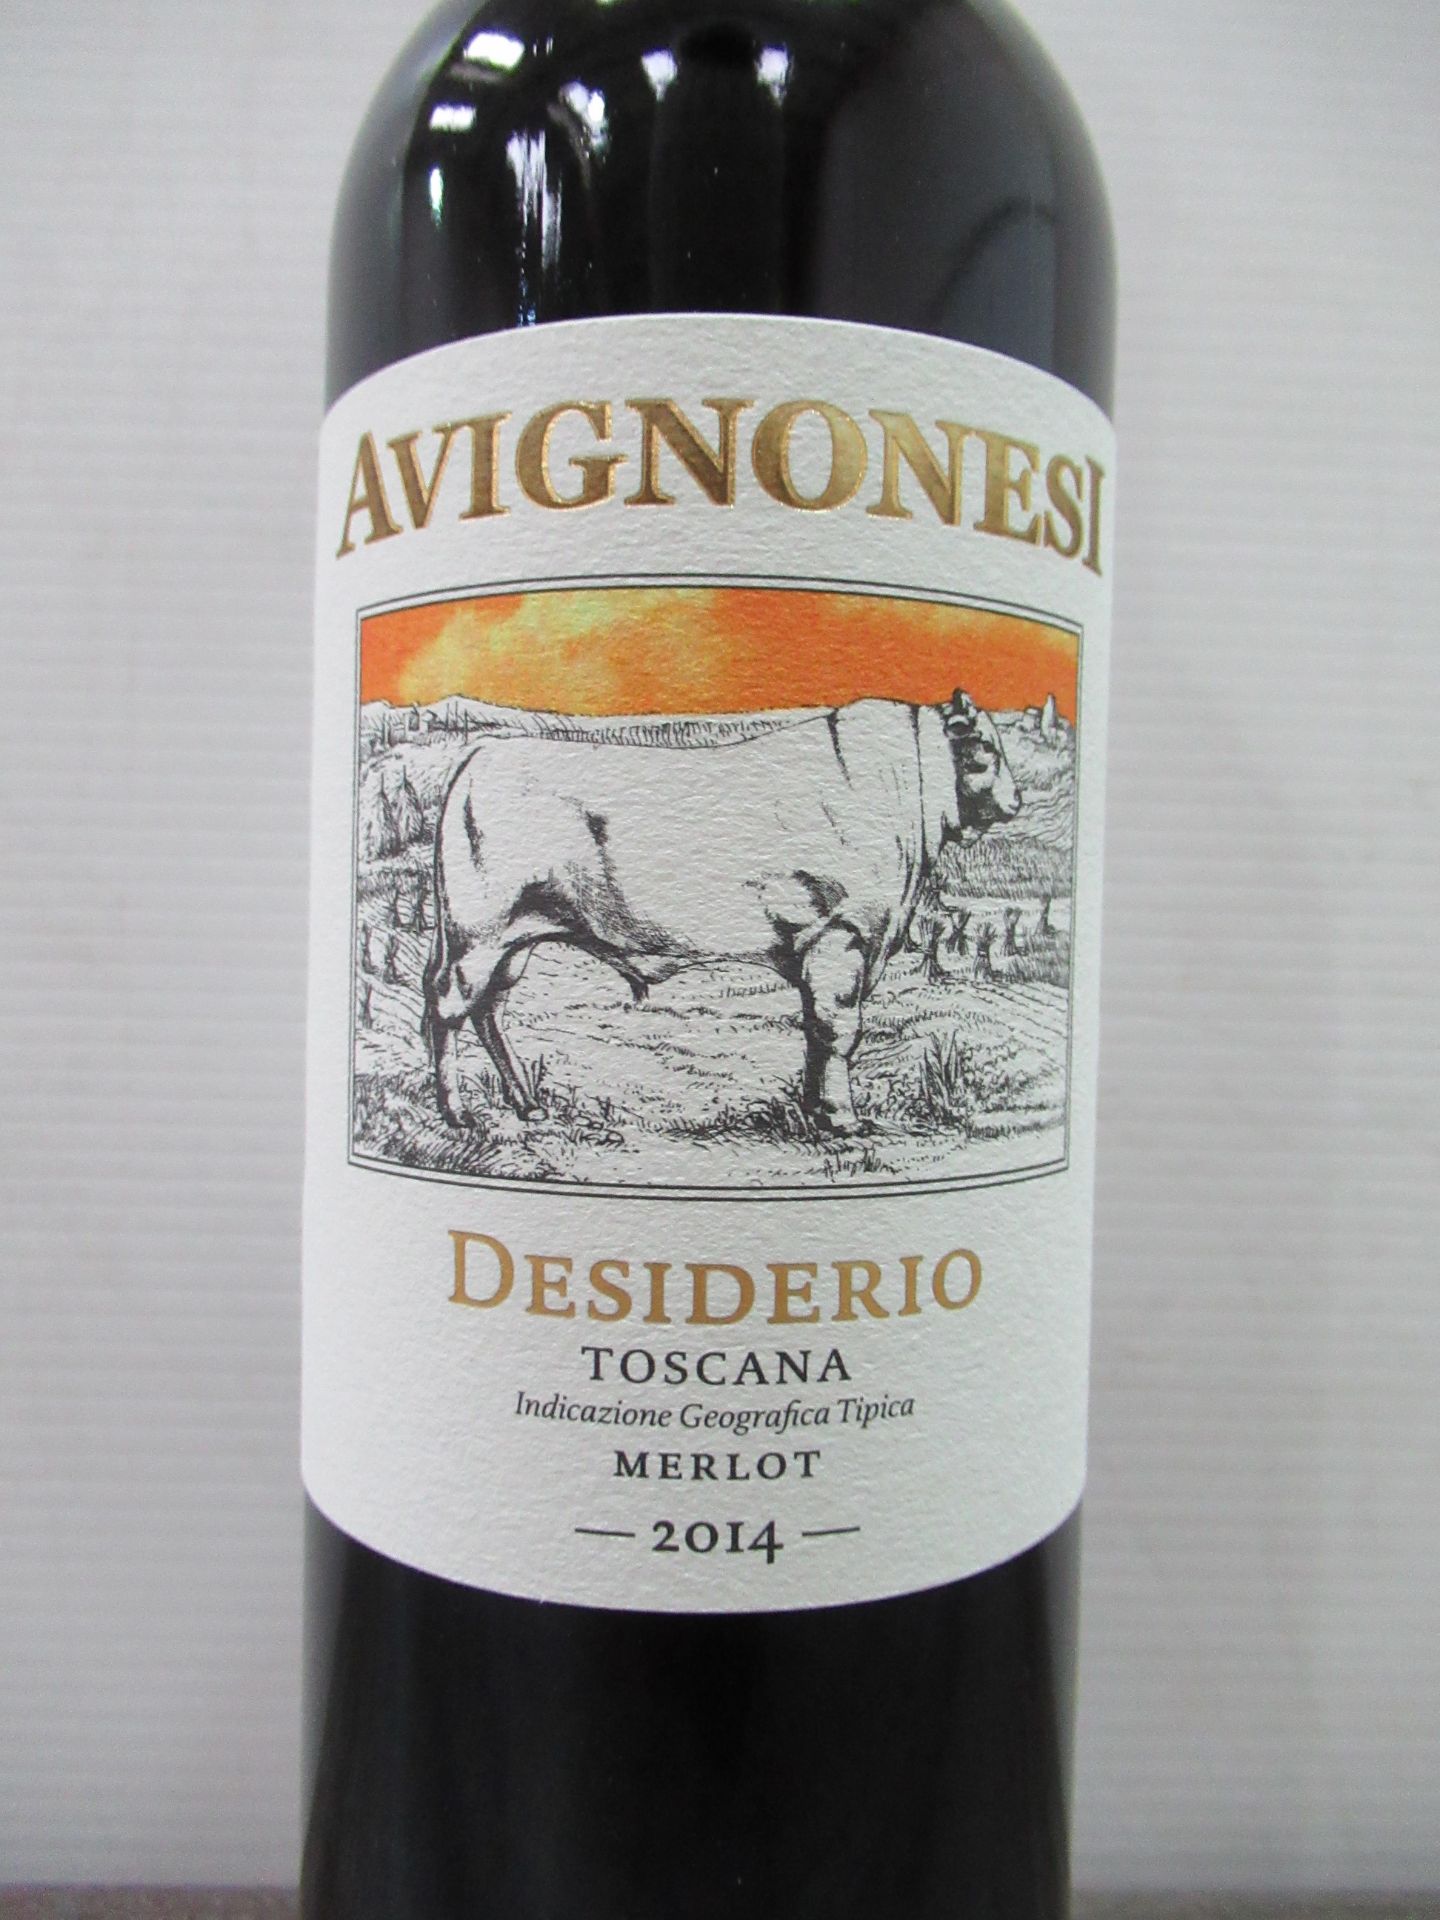 6 x Bottles of Avignonesi Desiderio Toscana Merlot IGT 2014 - Image 2 of 3